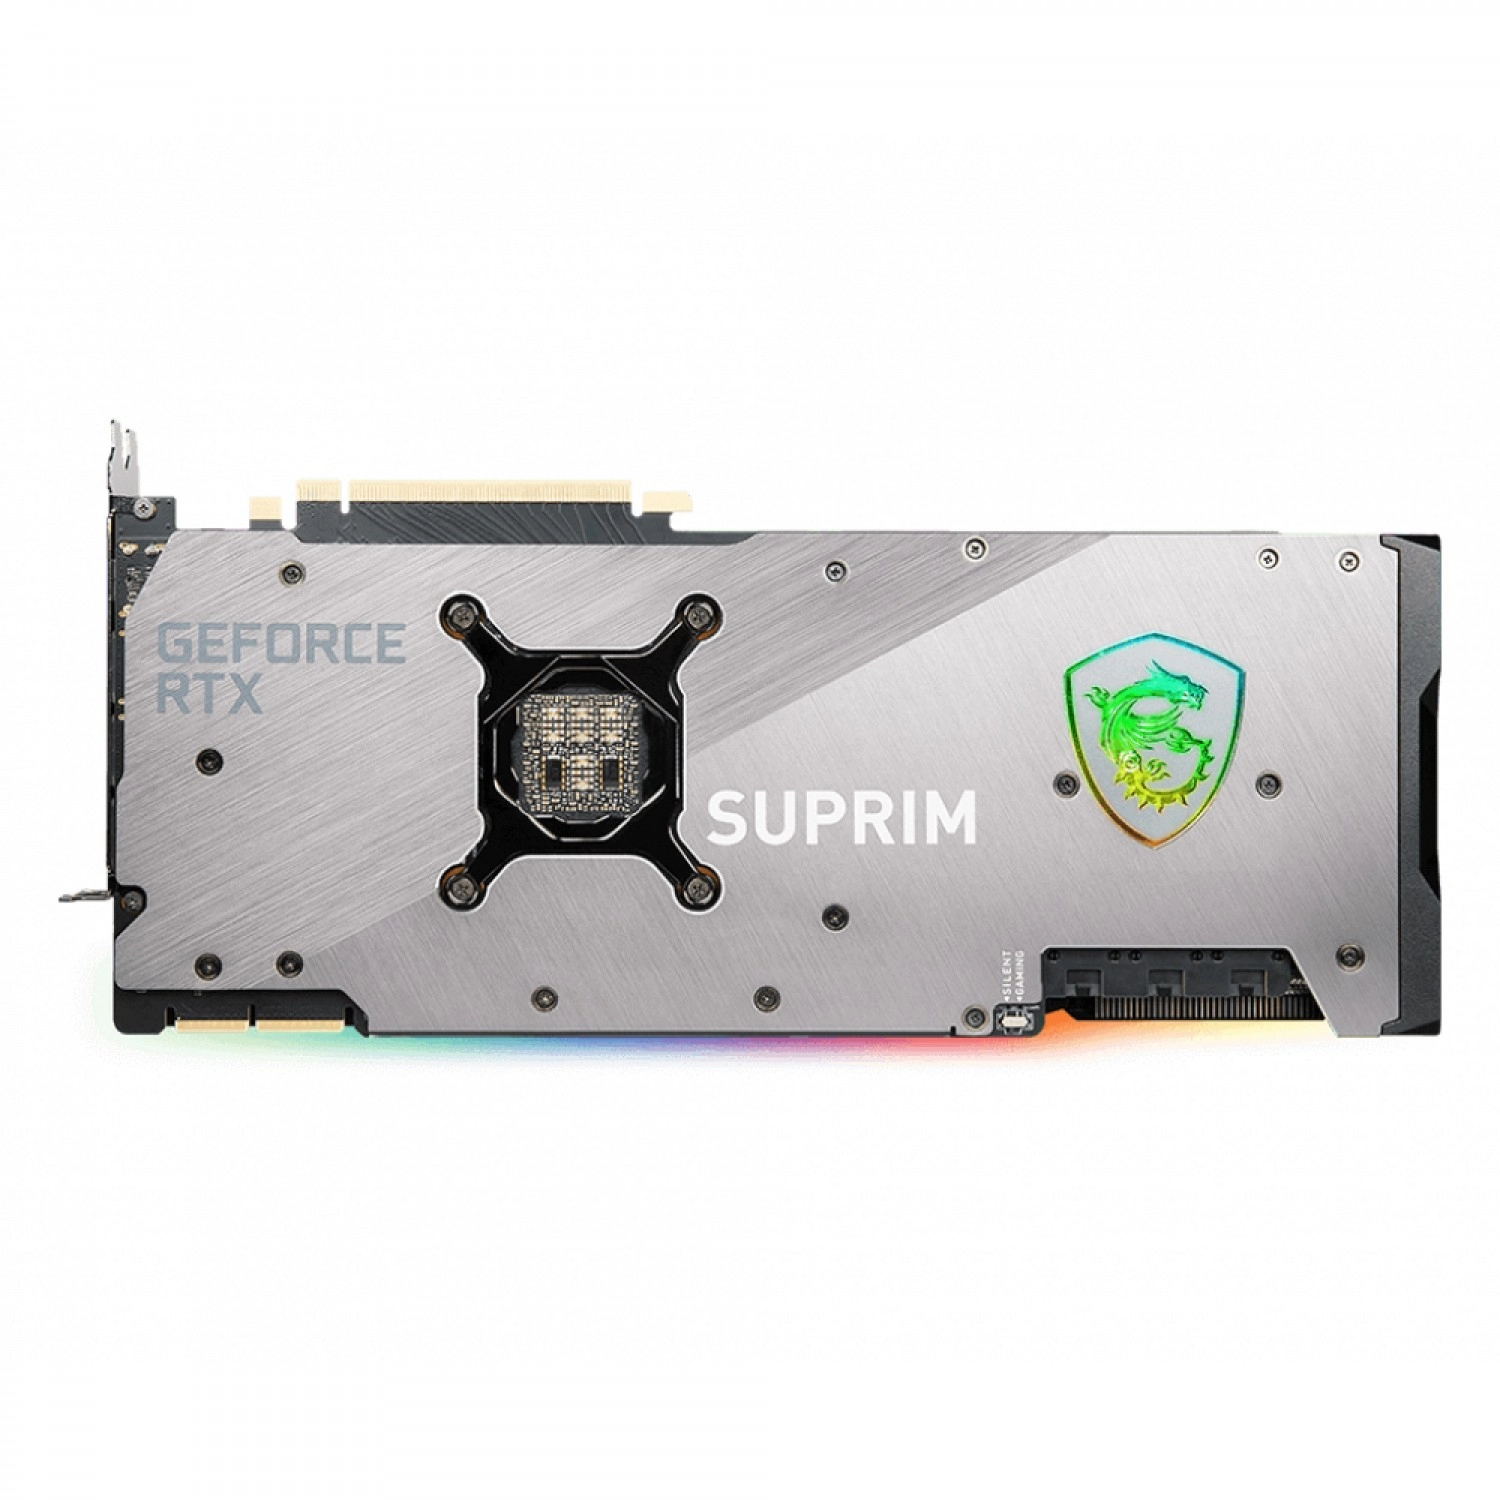 MSI GeForce RTX 3090 SUPRIM 24G Back View